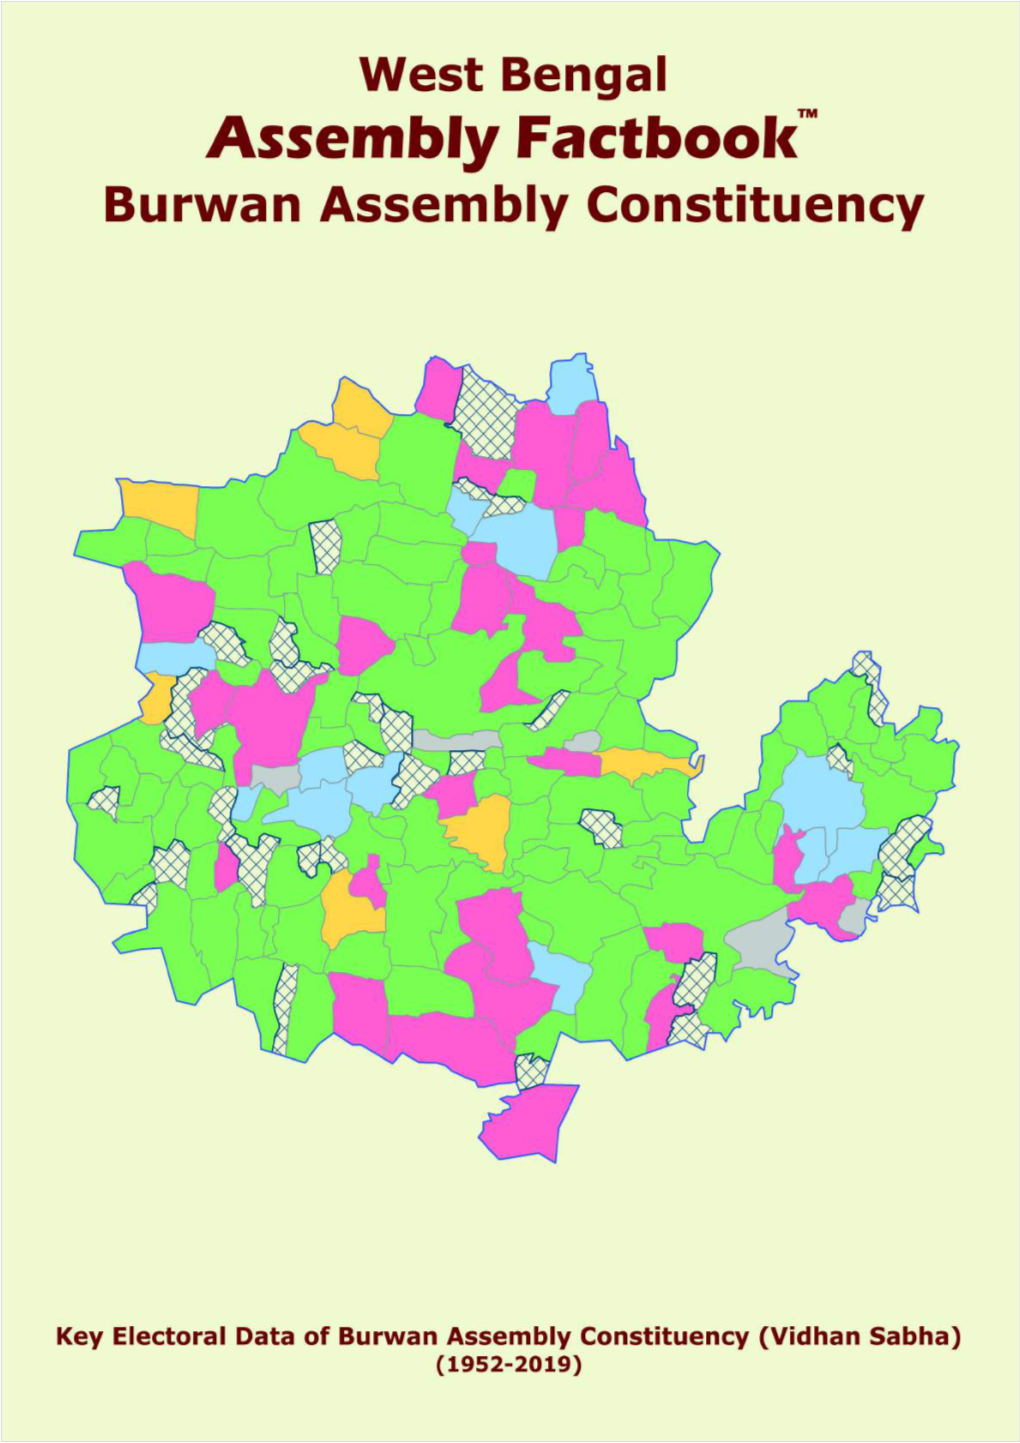 Burwan Assembly West Bengal Factbook